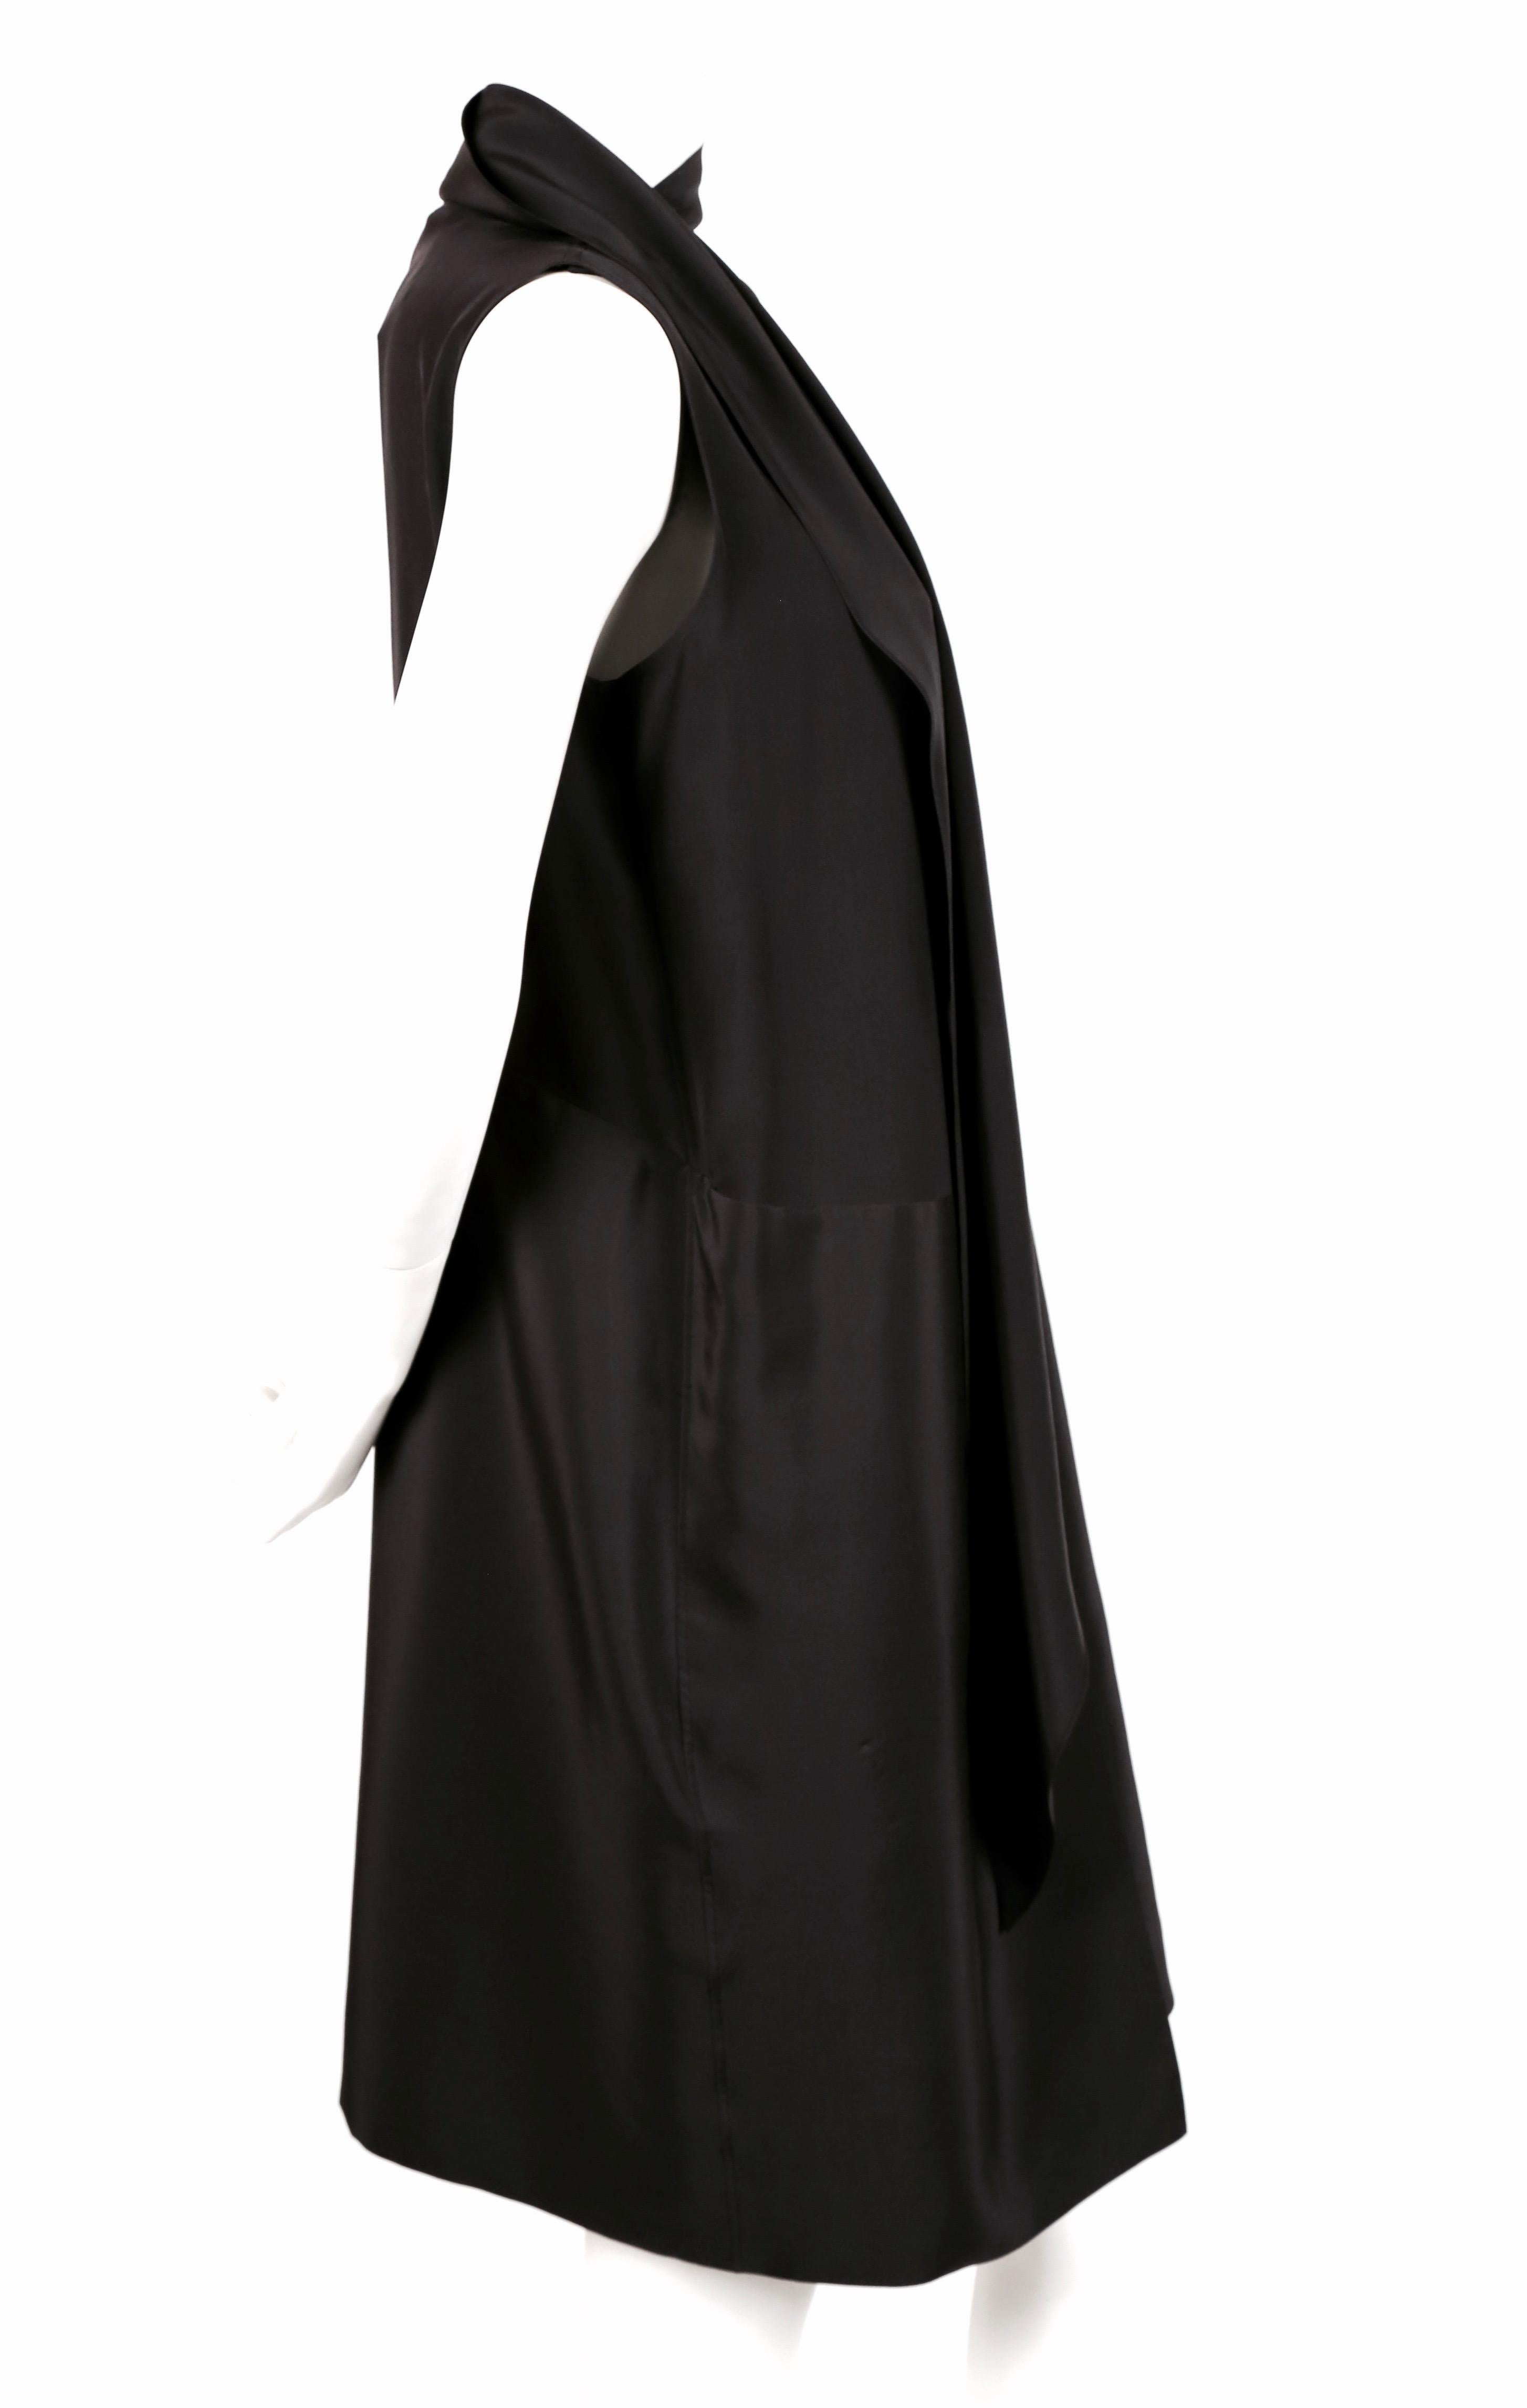 Black unworn CELINE by Phoebe Philo navy blue silk dress with draped scarf neckline